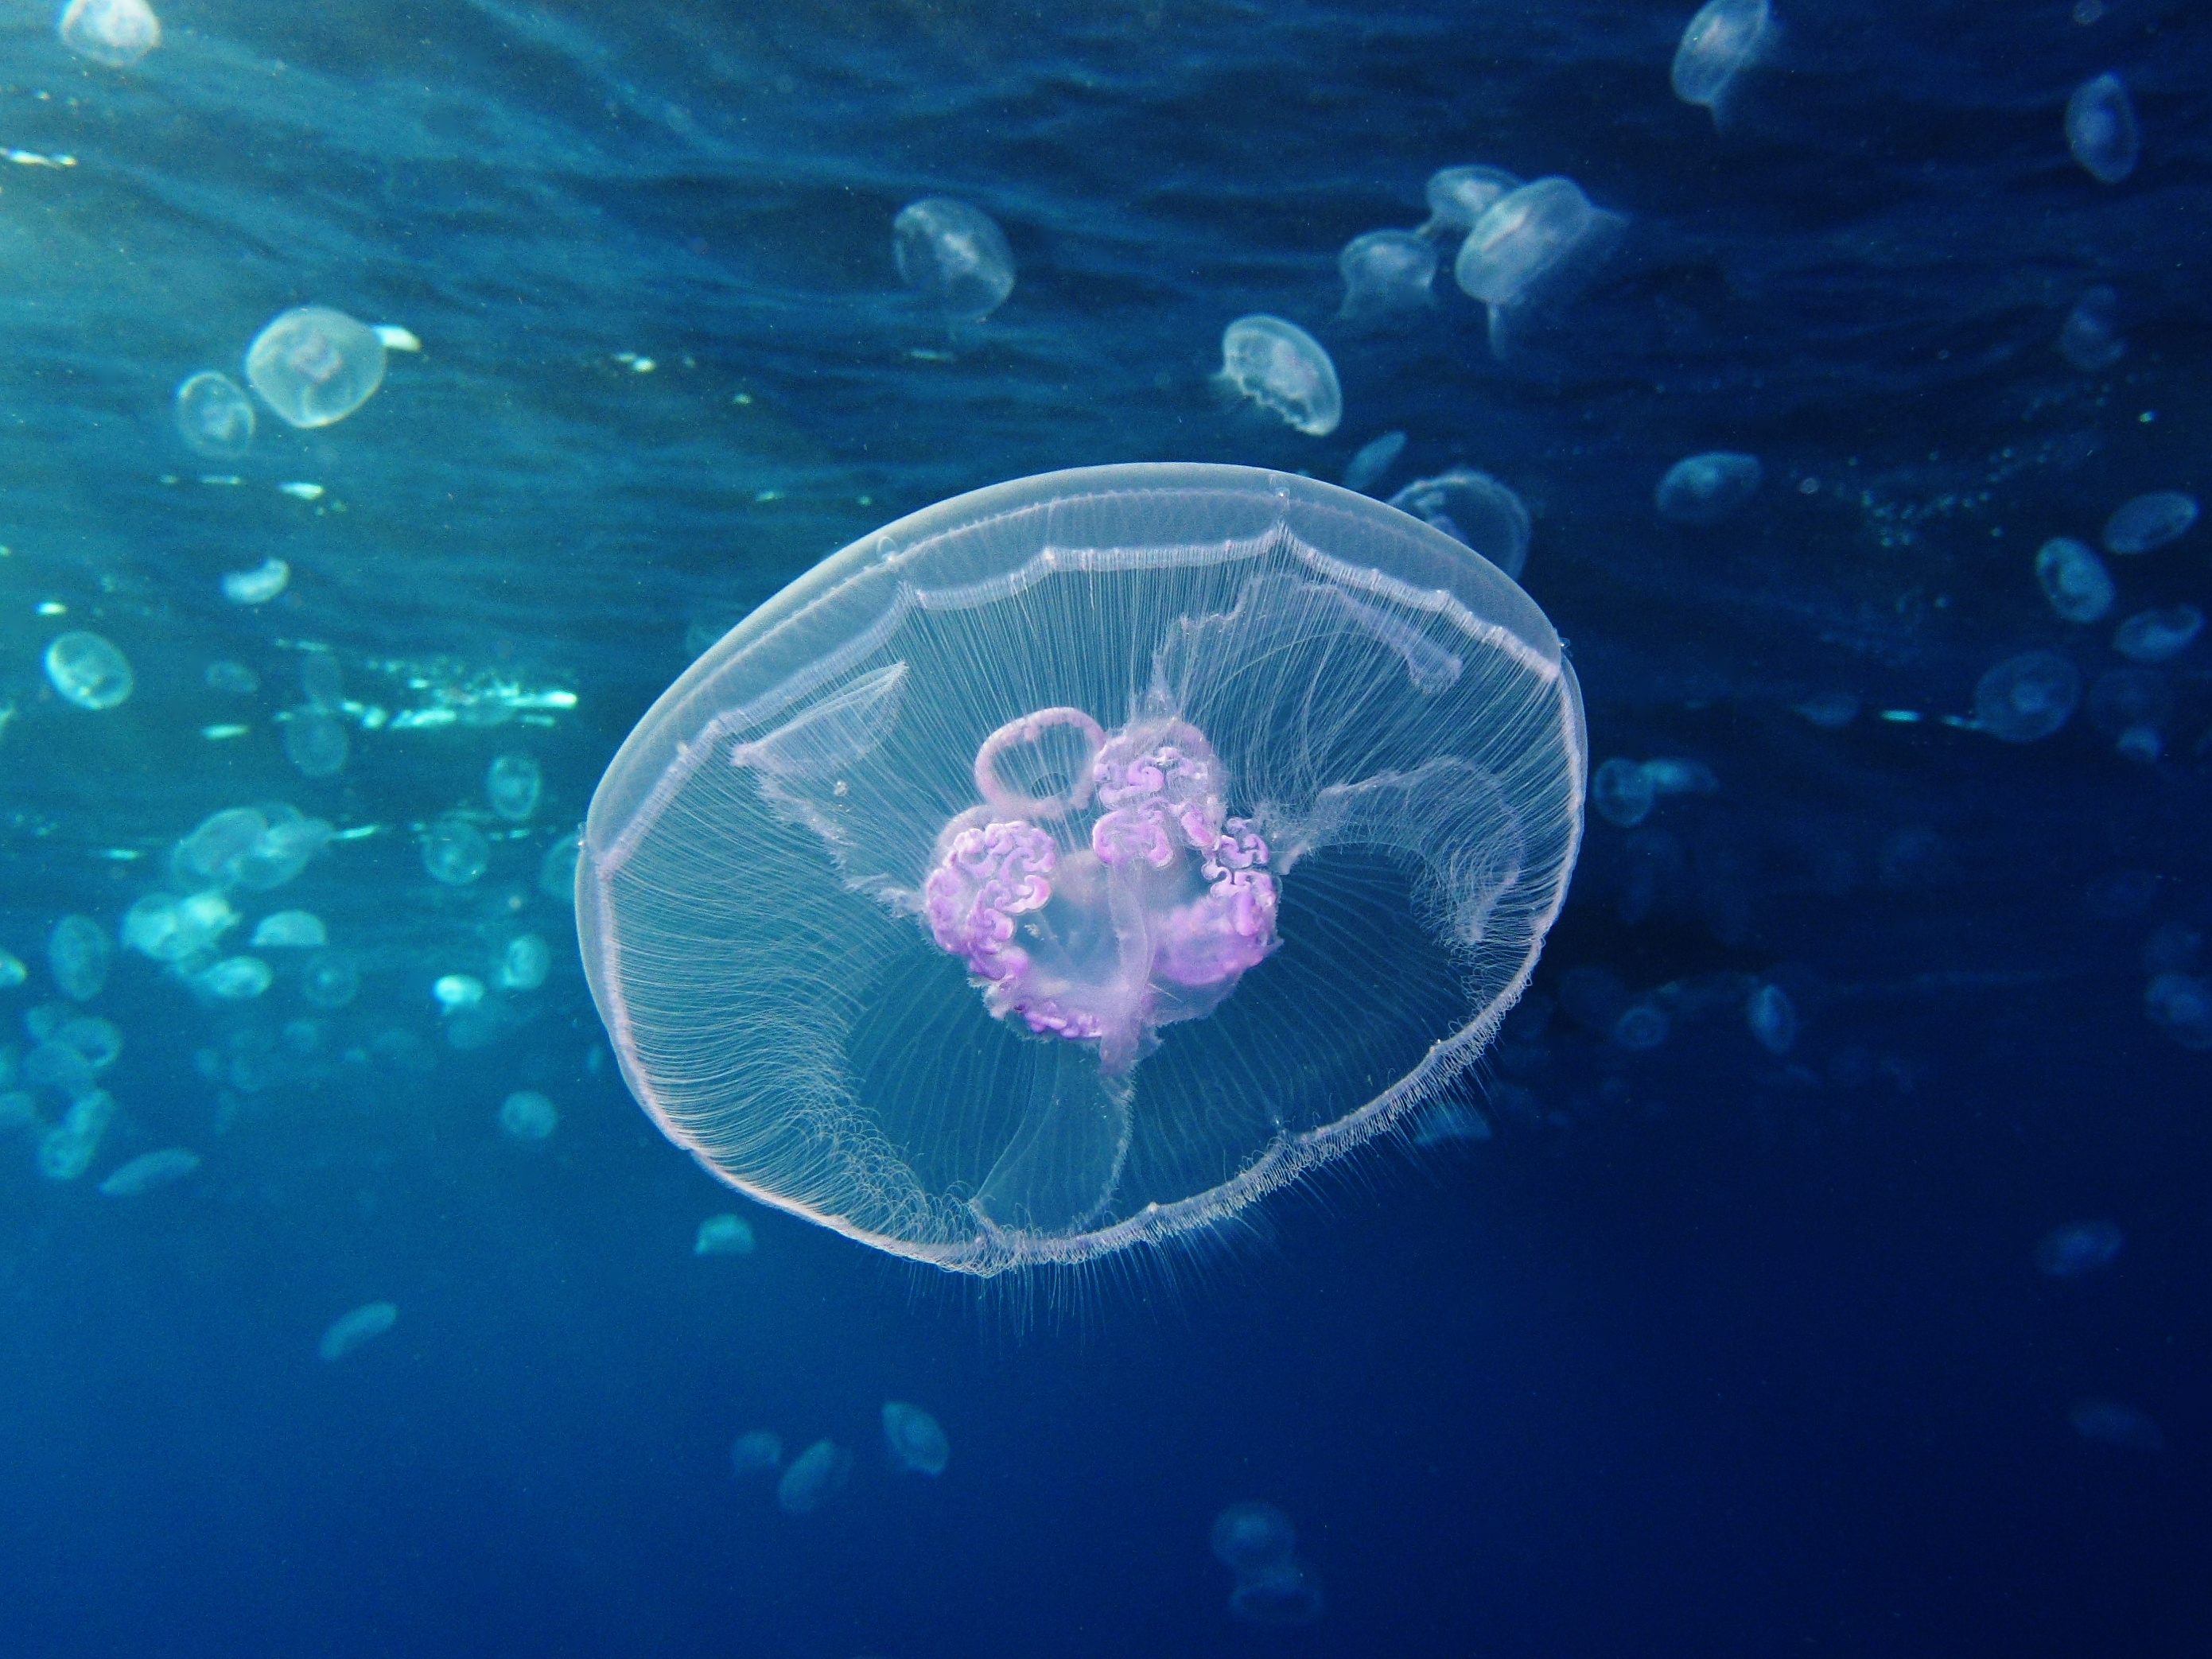 Moon jellyfish [Red Sea, Egypt] Image credit: Alexander Vasenin